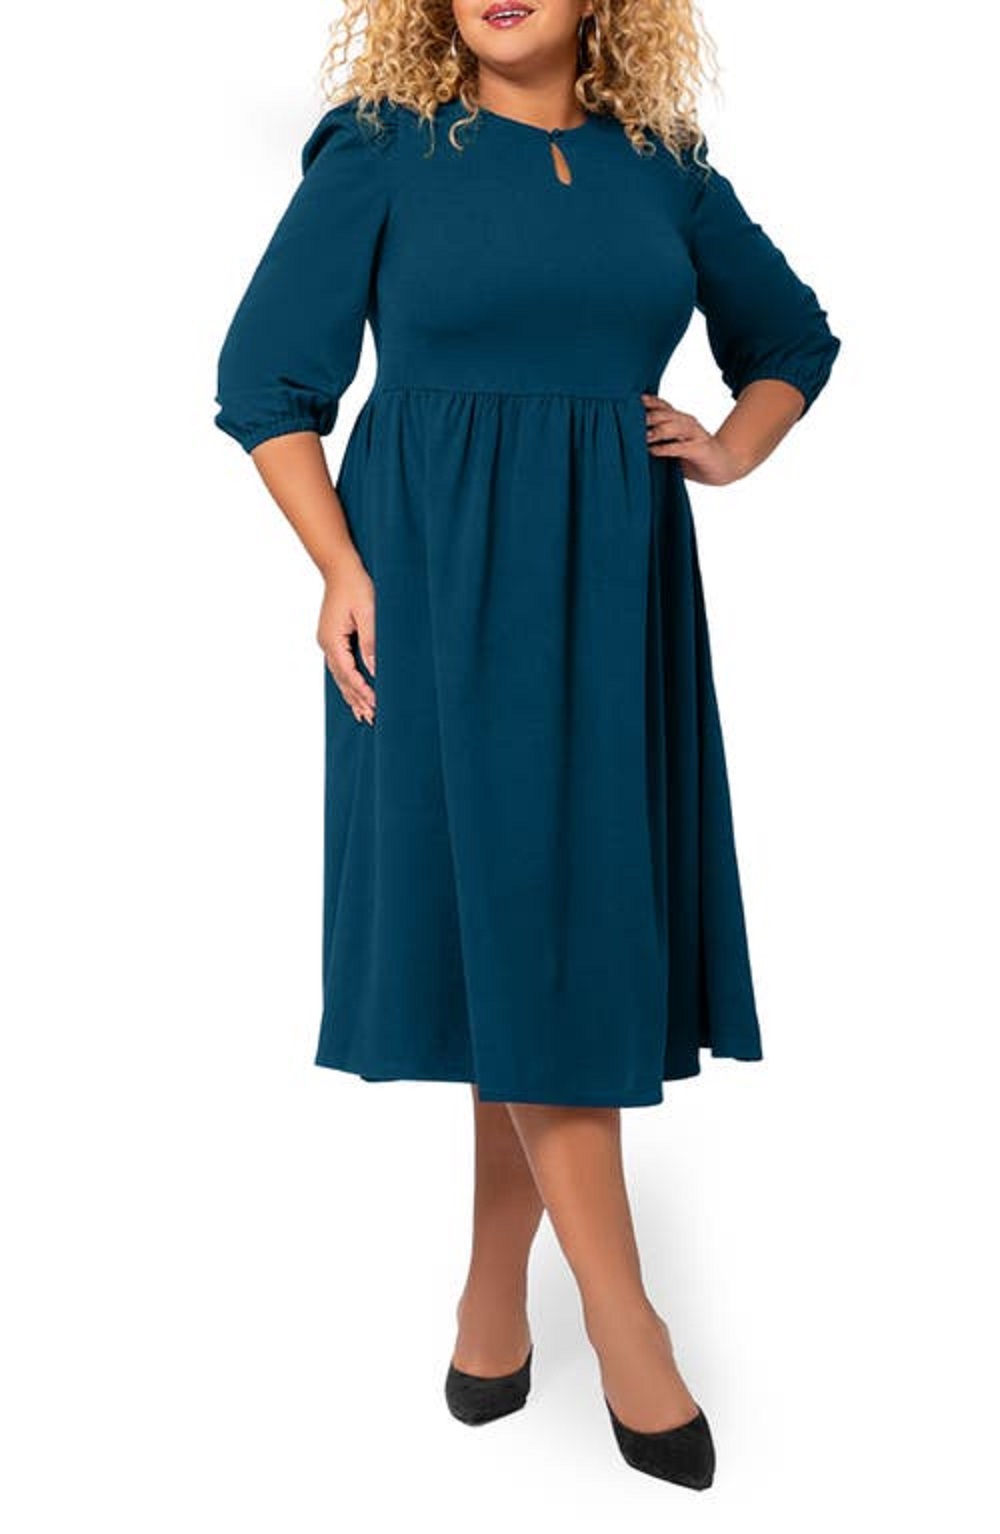 Leota Women's Iman Dress Blue Size 1X